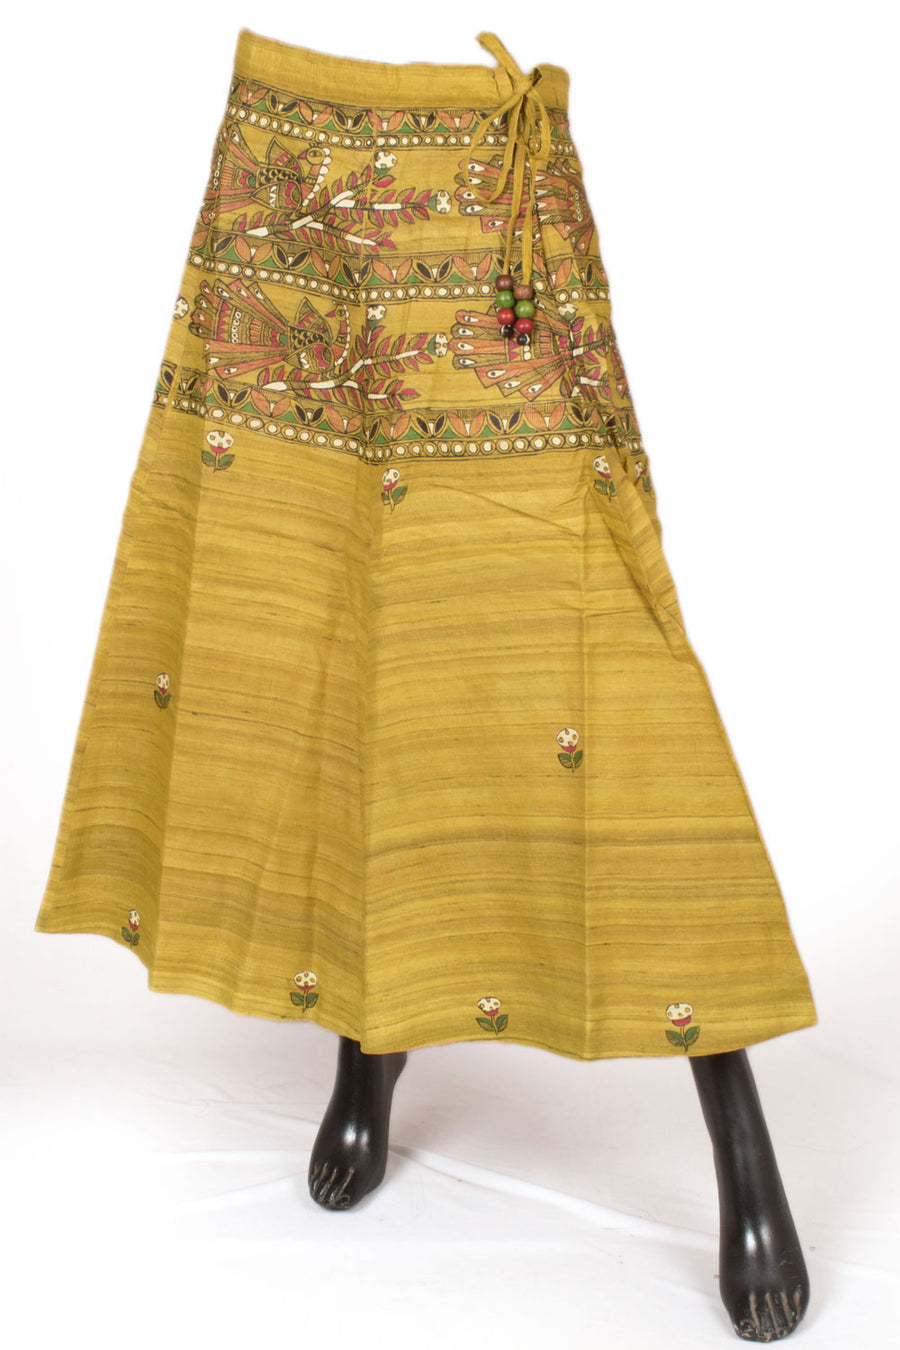 Hand Painted Madhubani Bhagalpur Tussar Silk Skirt with Peacock Design